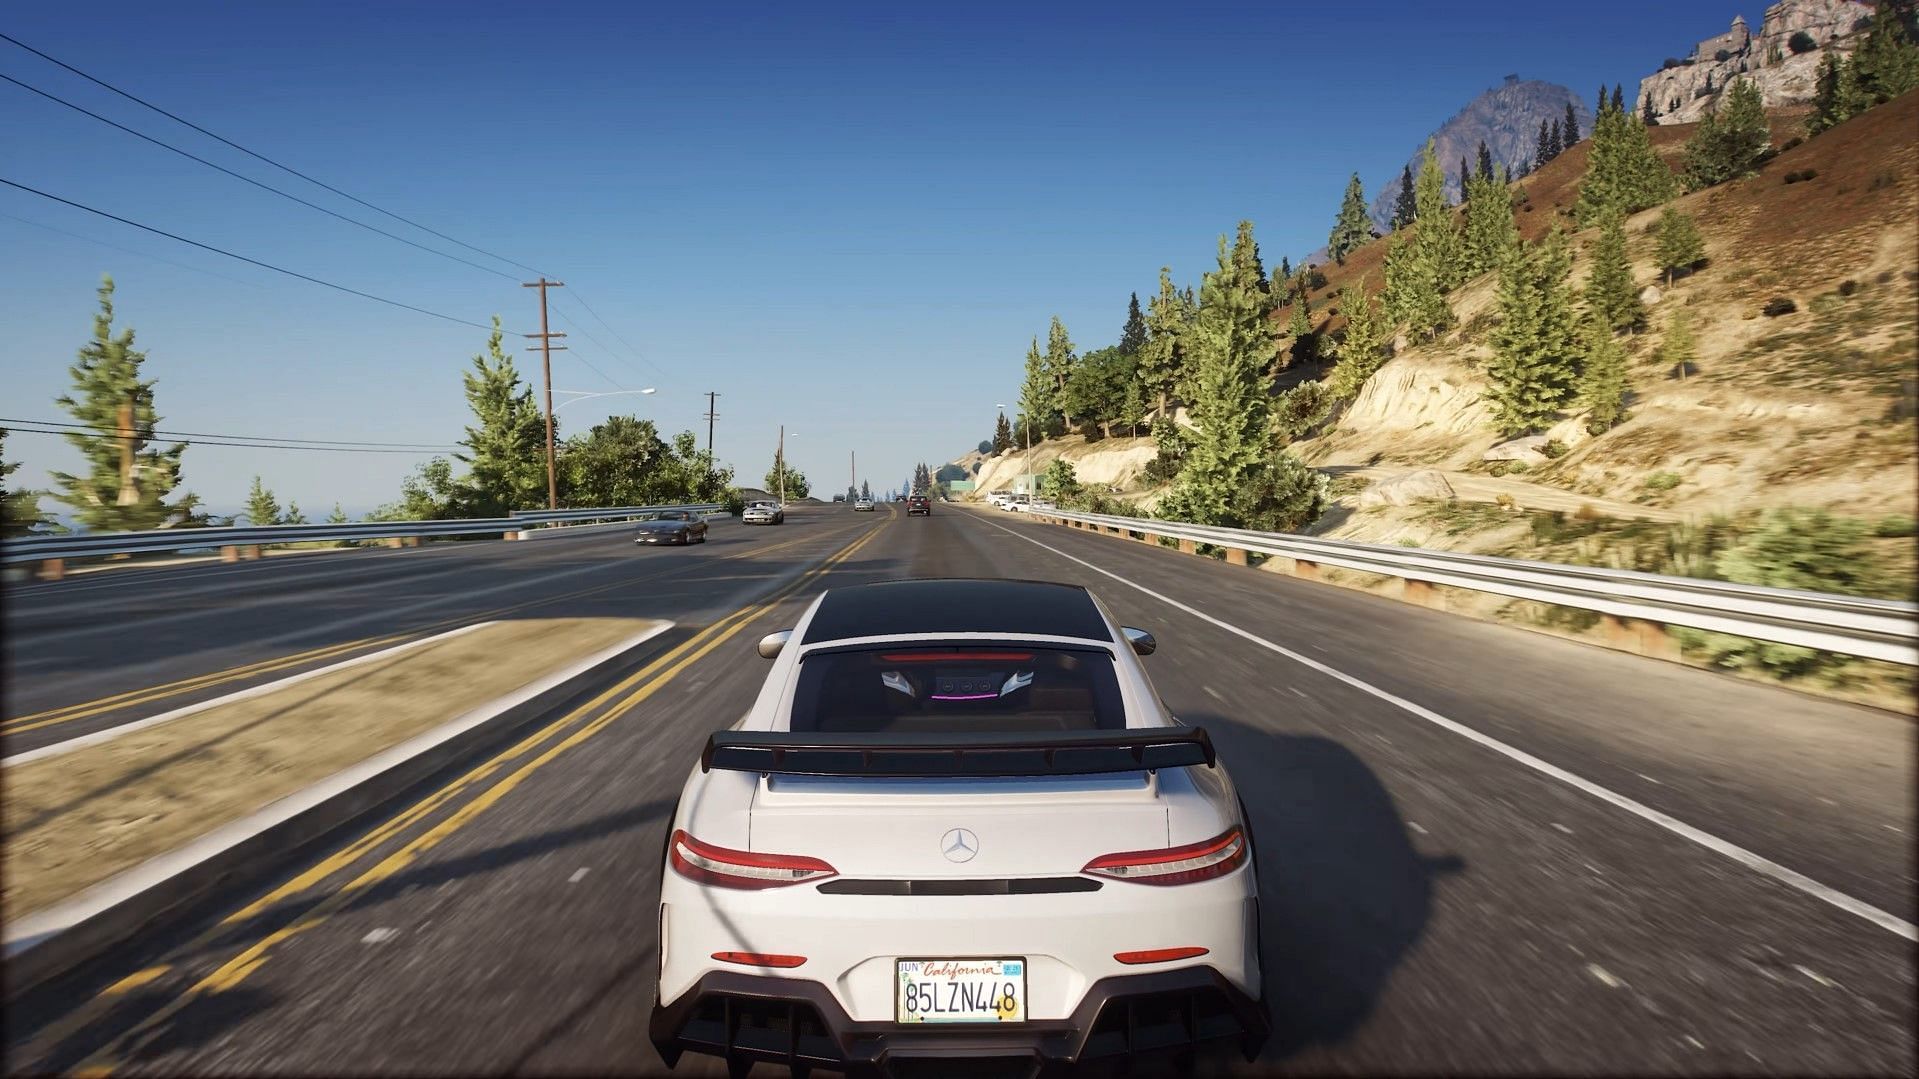 Stunning GTA San Andreas footage shows game with lifelike 8K